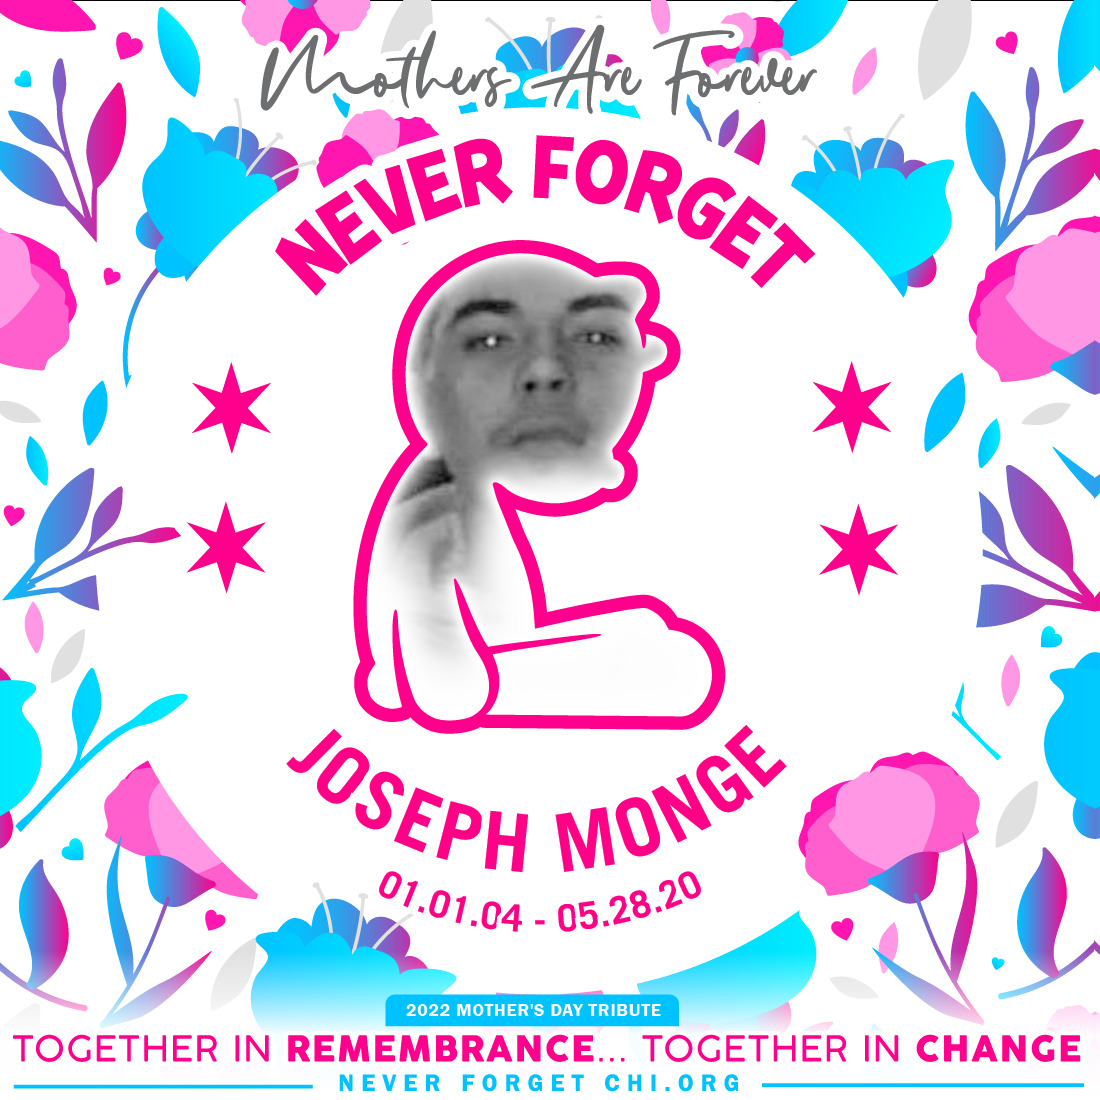 Joseph Monge